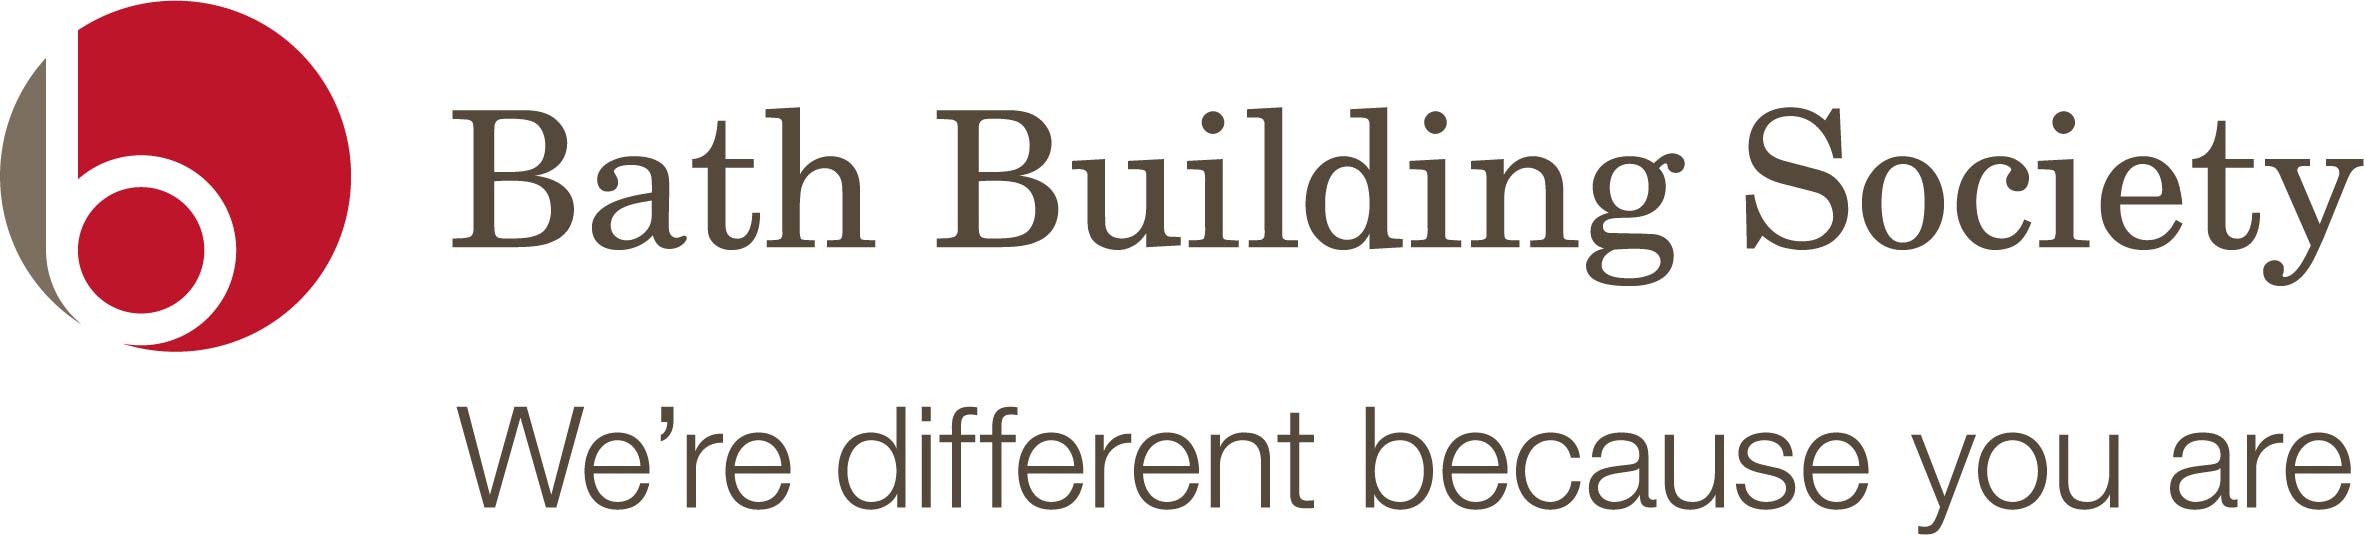 logo for Bath Building Society